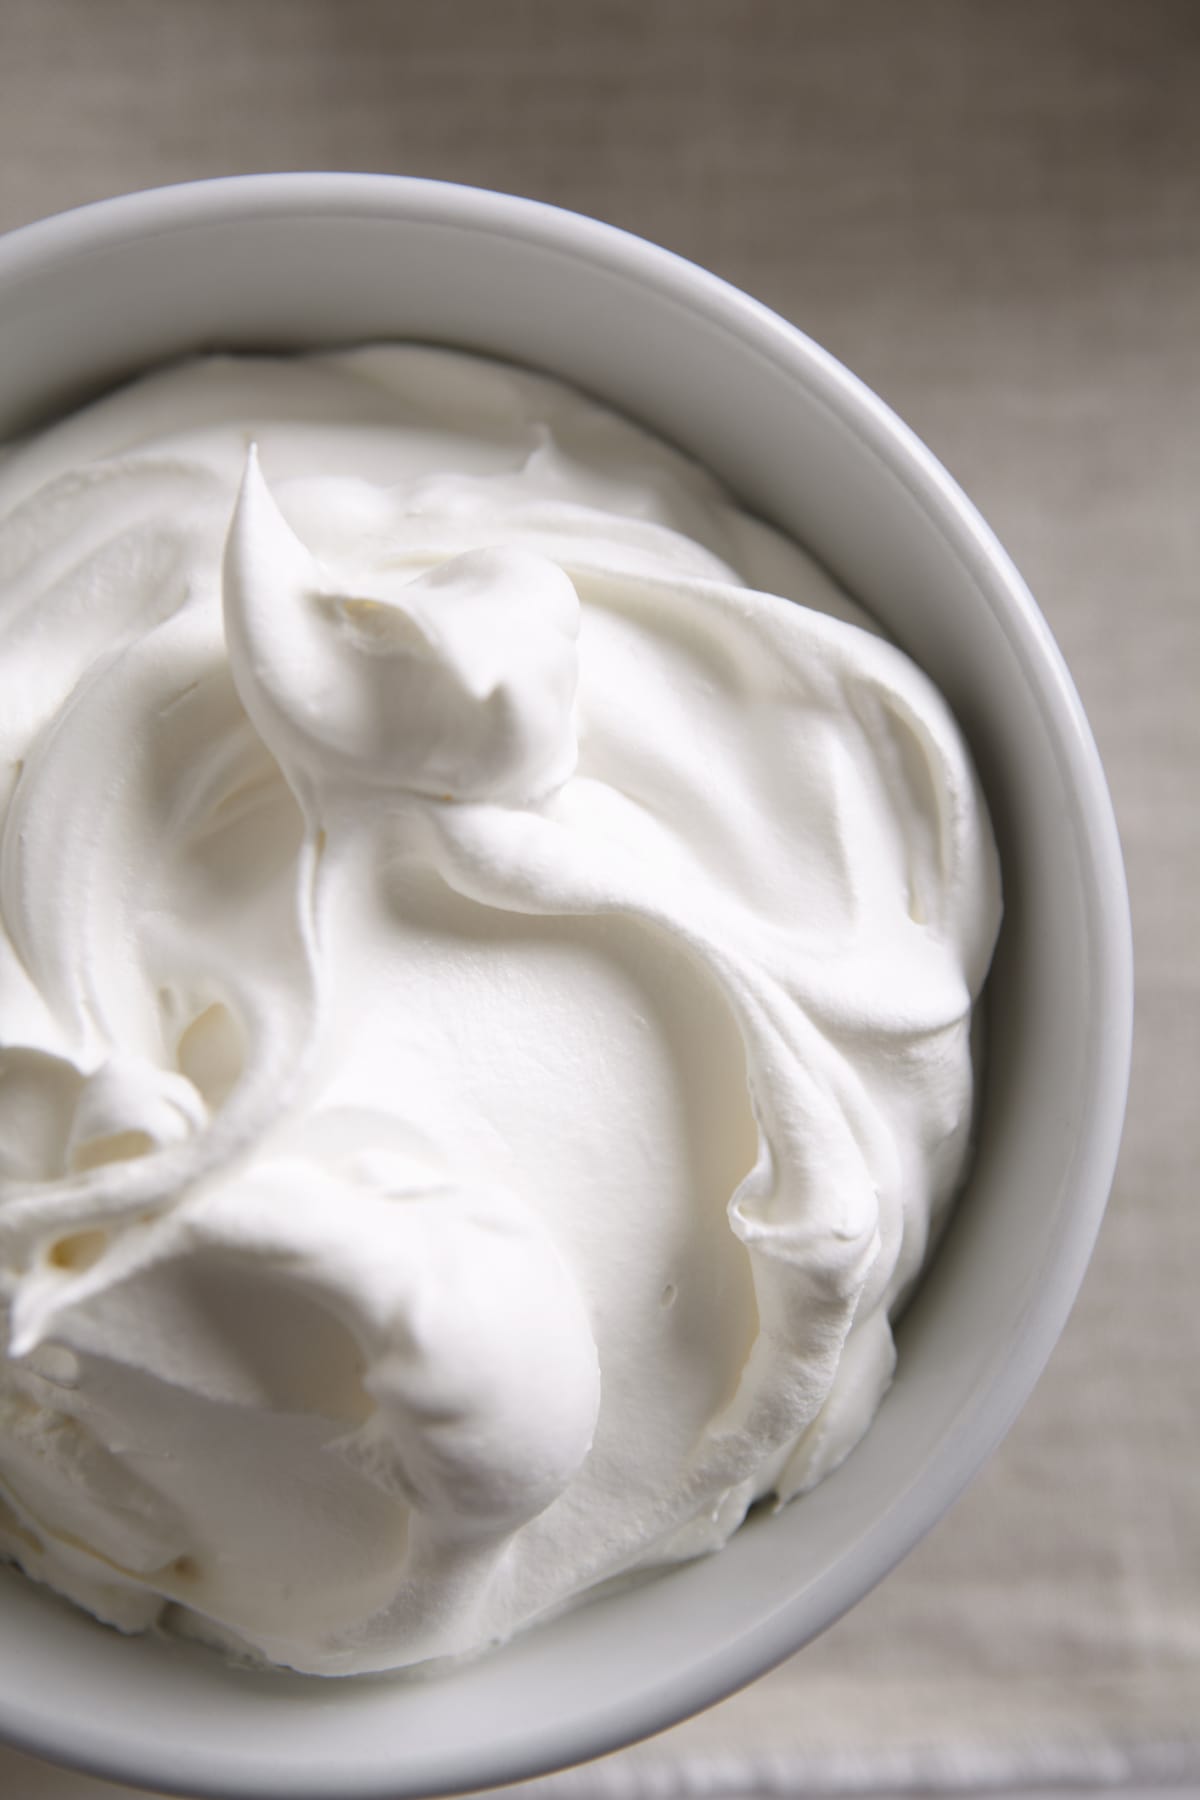 Creamy white yoghurt peaks